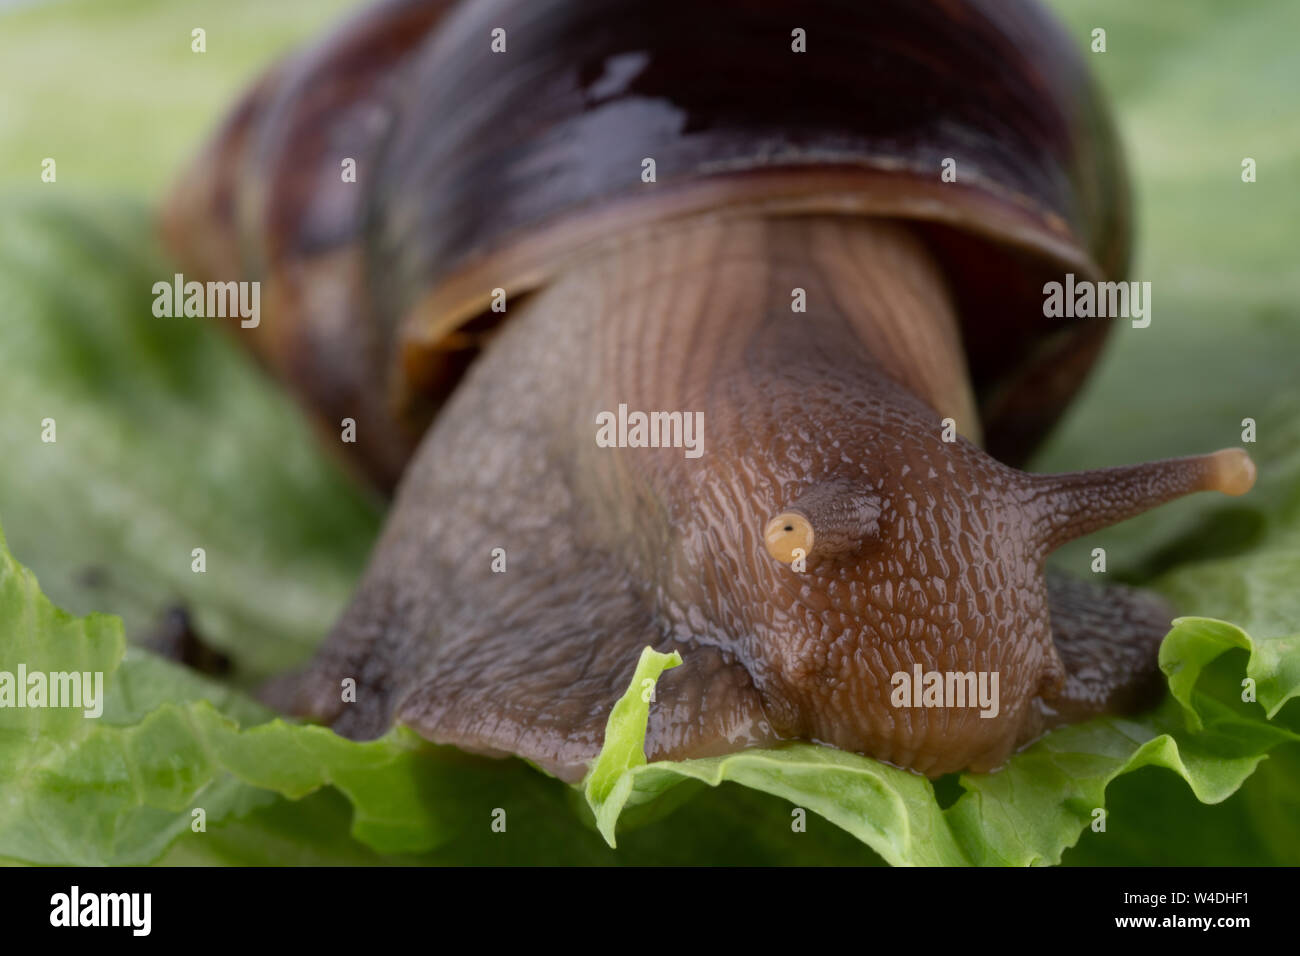 Giant African land snail Achatina fulica eating green salad, macro Stock Photo